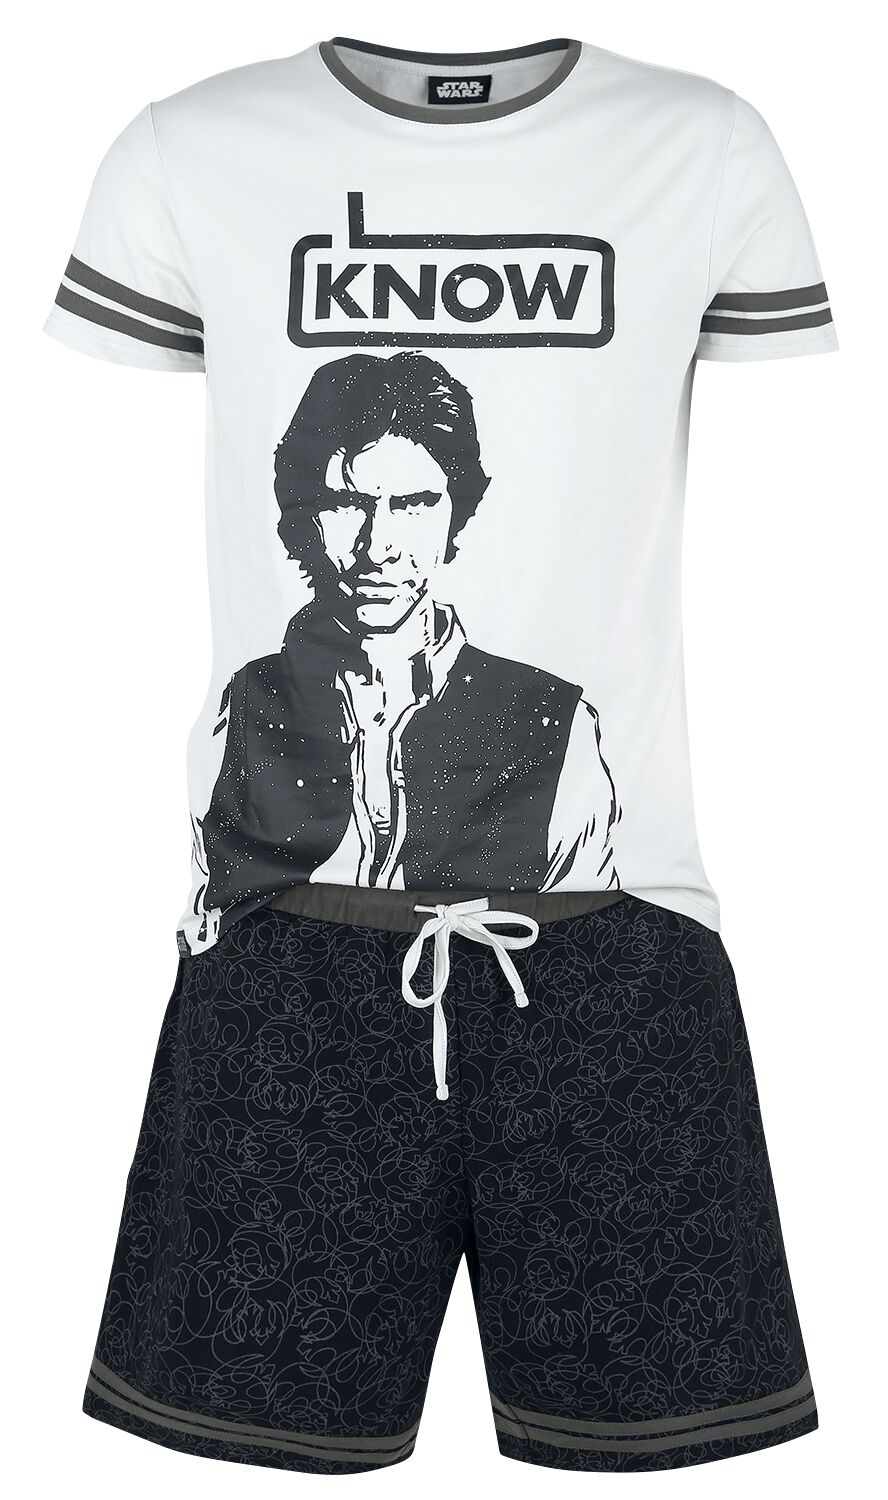 Star Wars Han Solo - I Know Schlafanzug grau schwarz in S